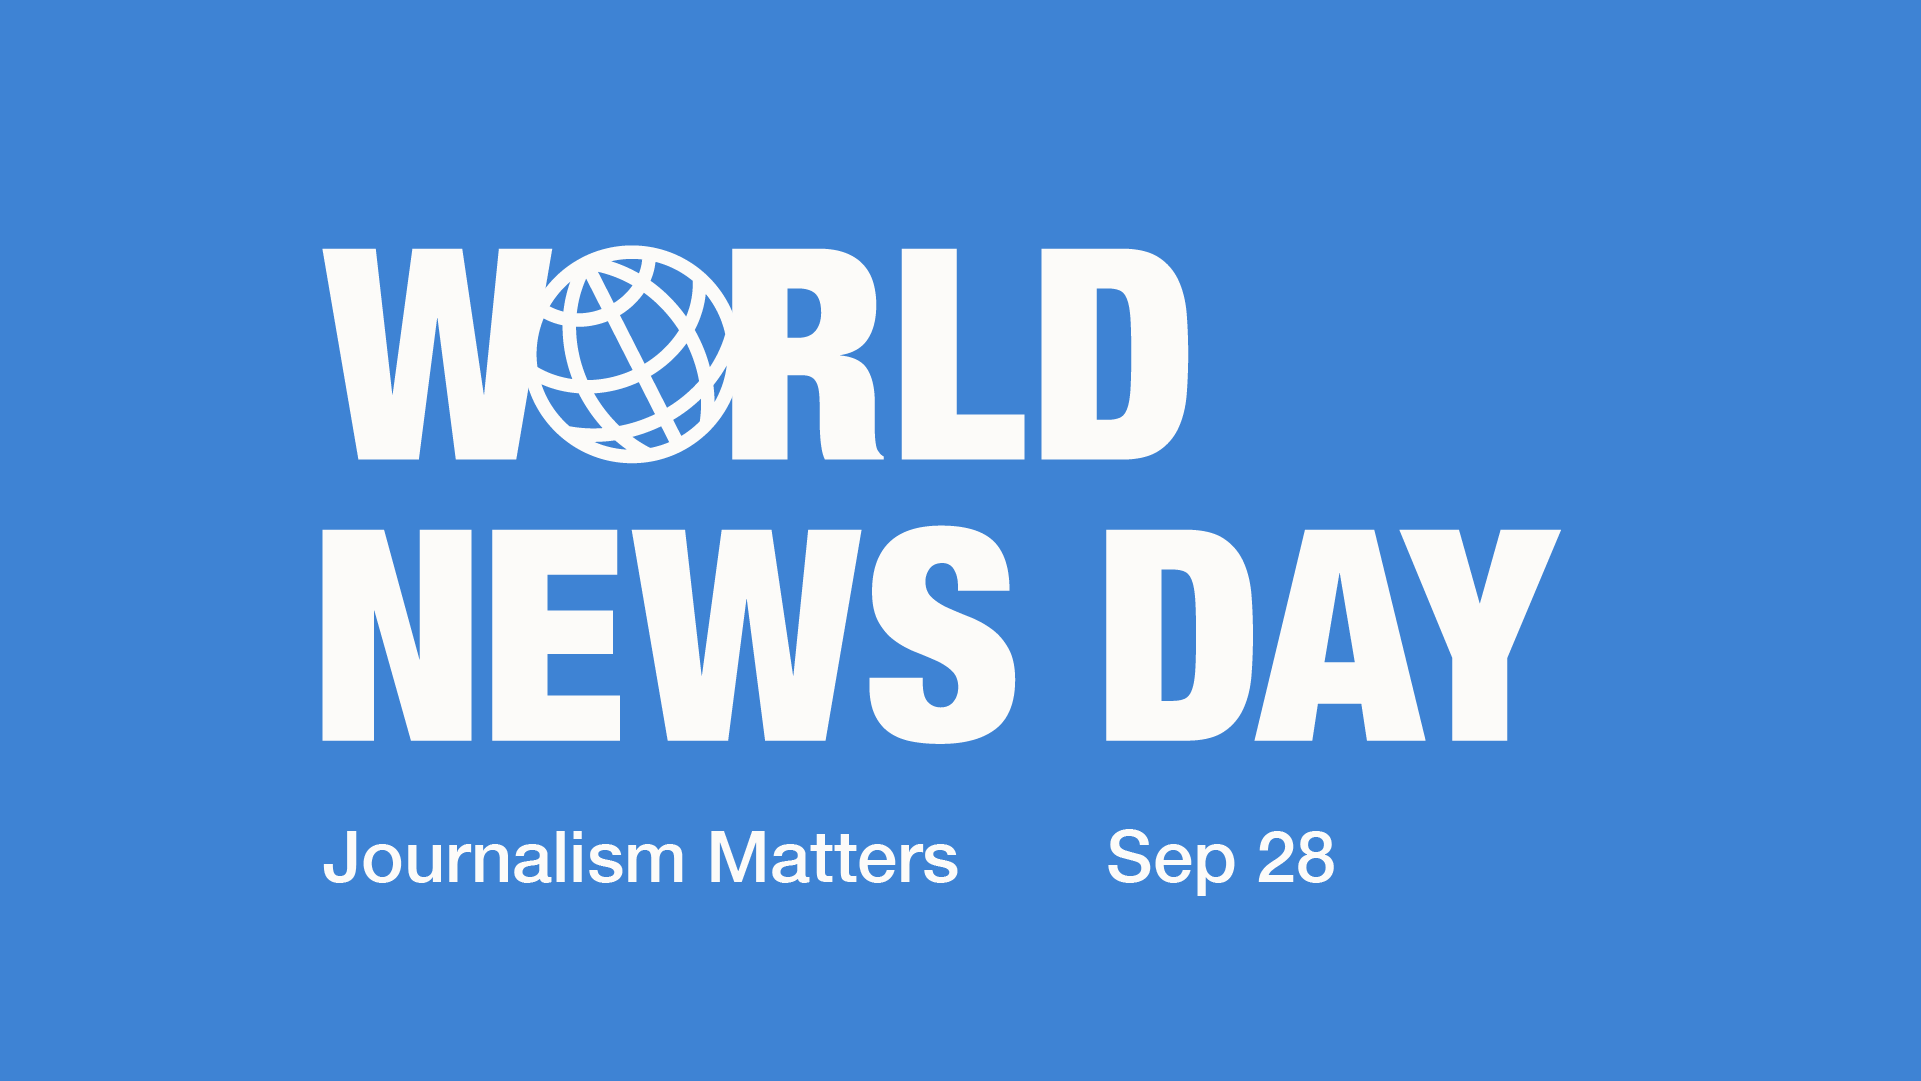 PRINPAG to mark World News Day in Ghana on September 28